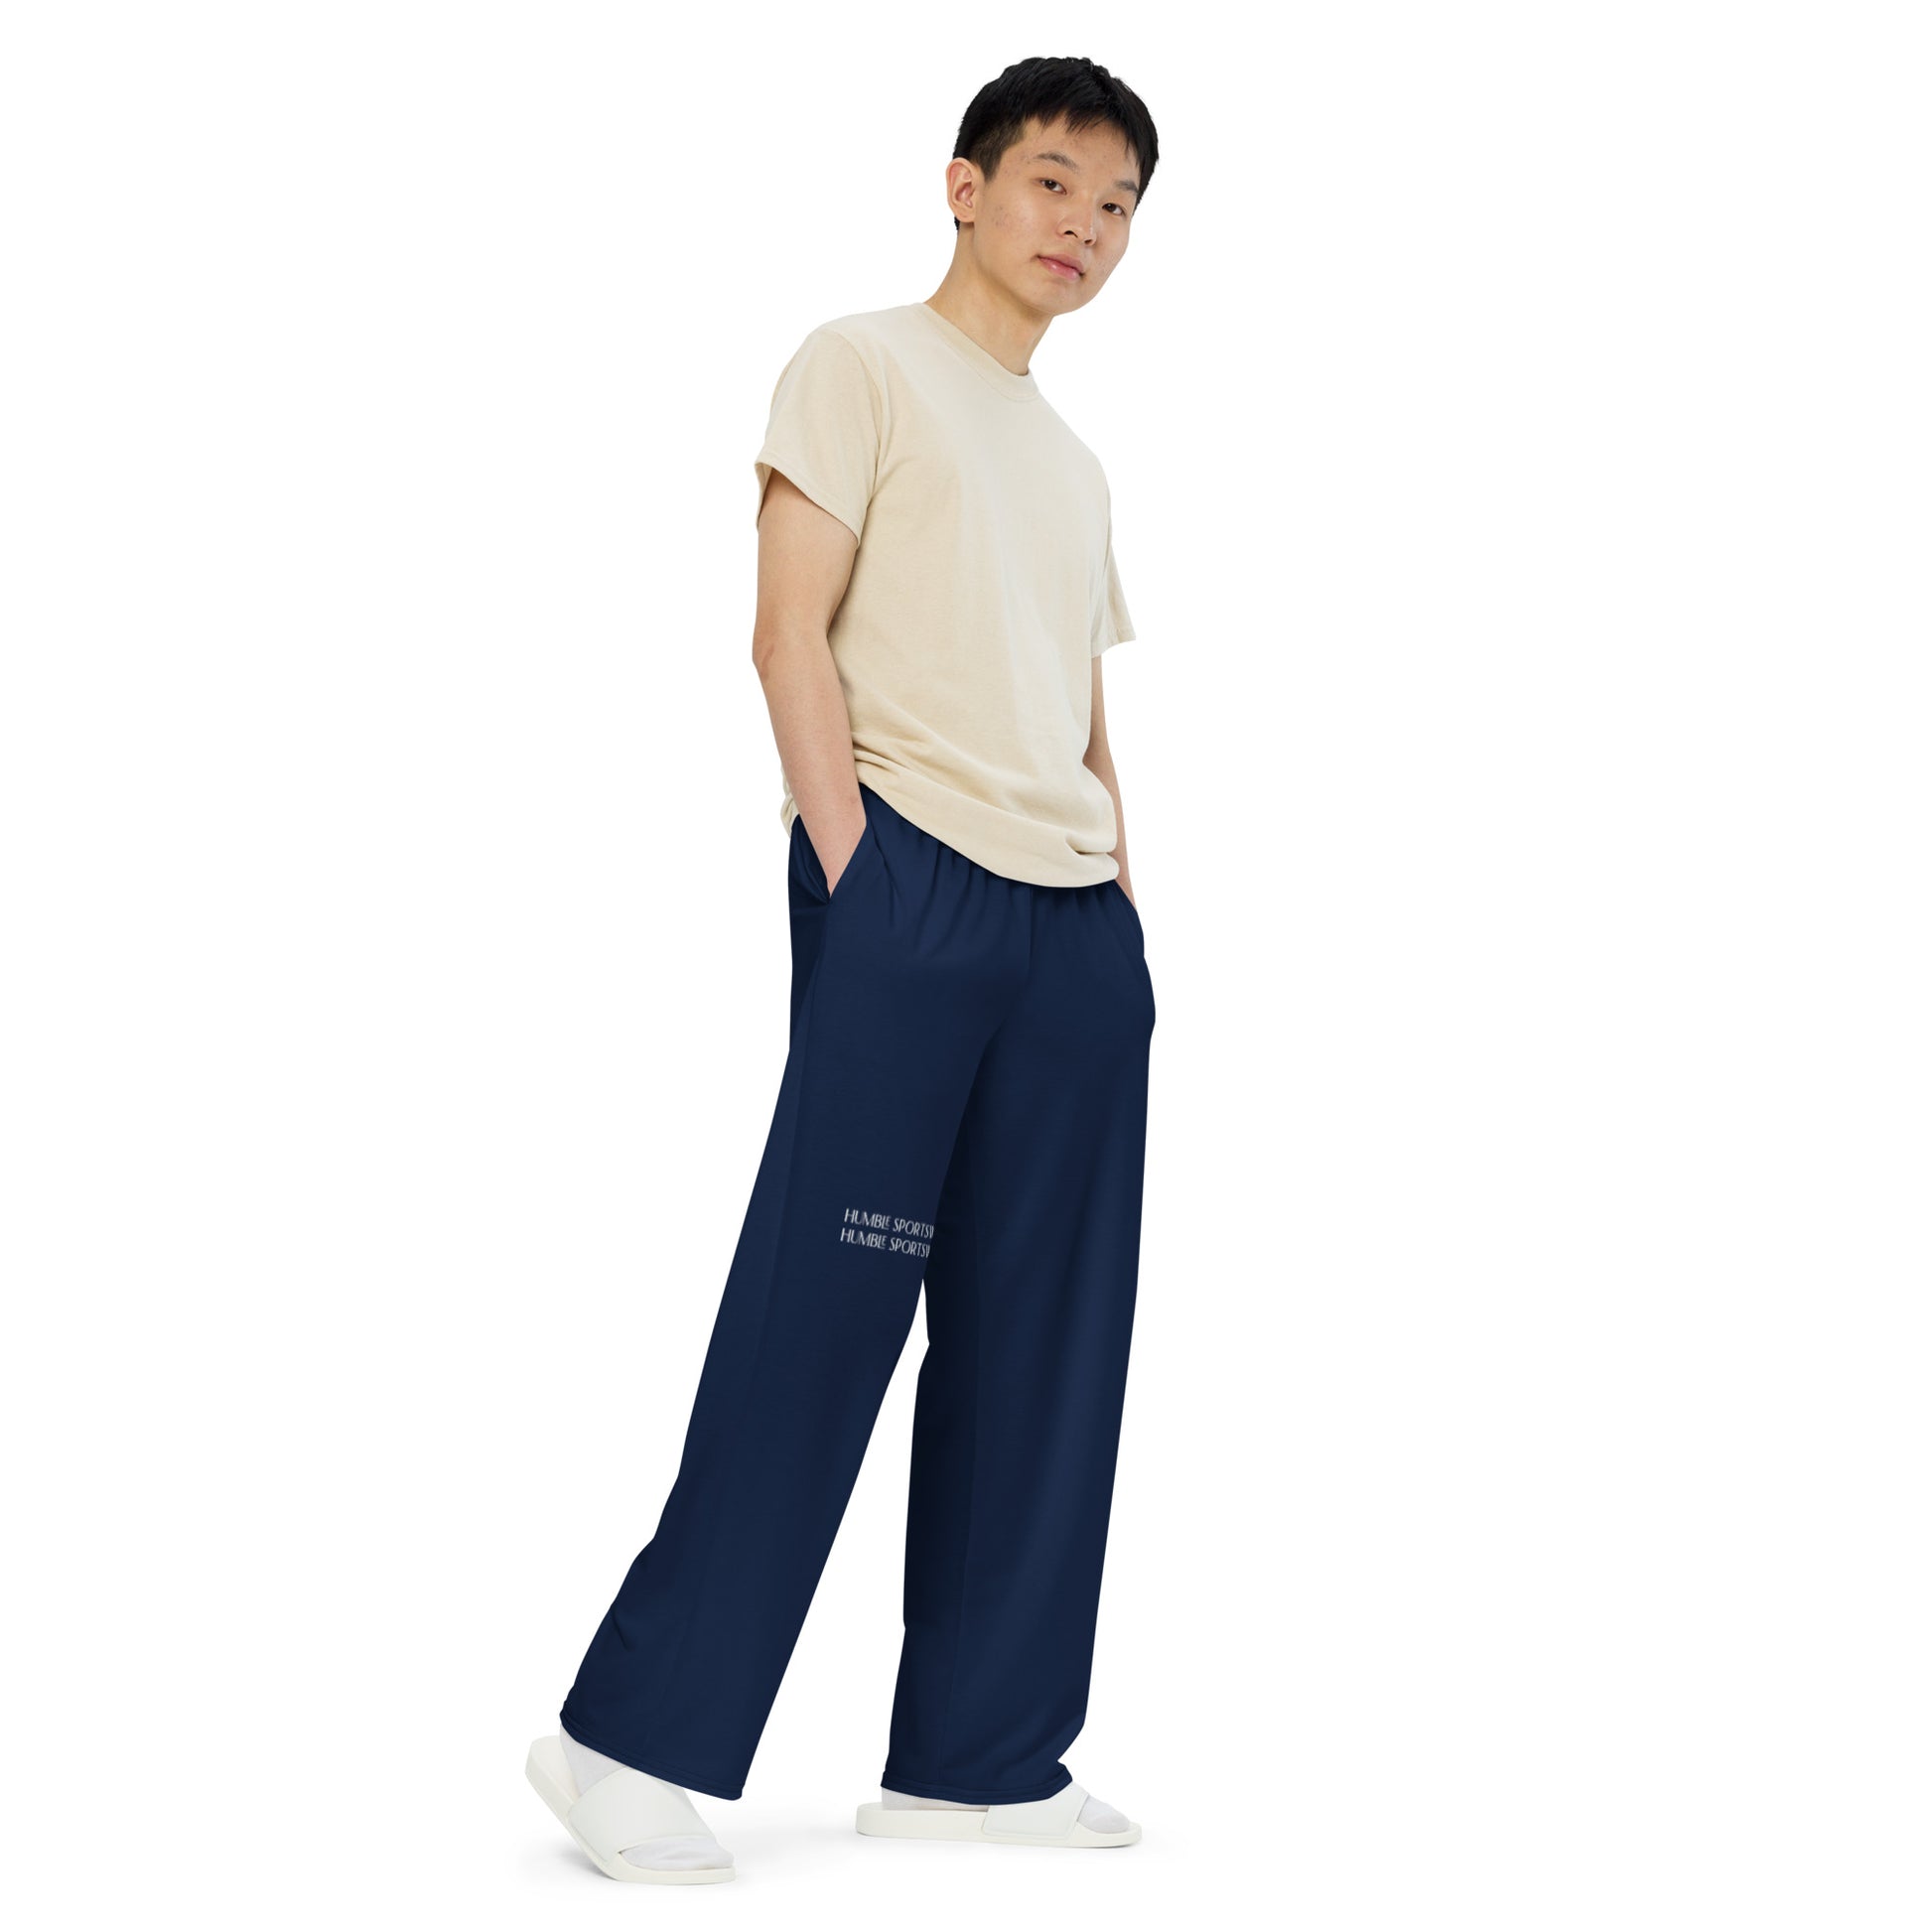 Humble sportswear, men's color match activewear navy blue wide-leg loungewear pants